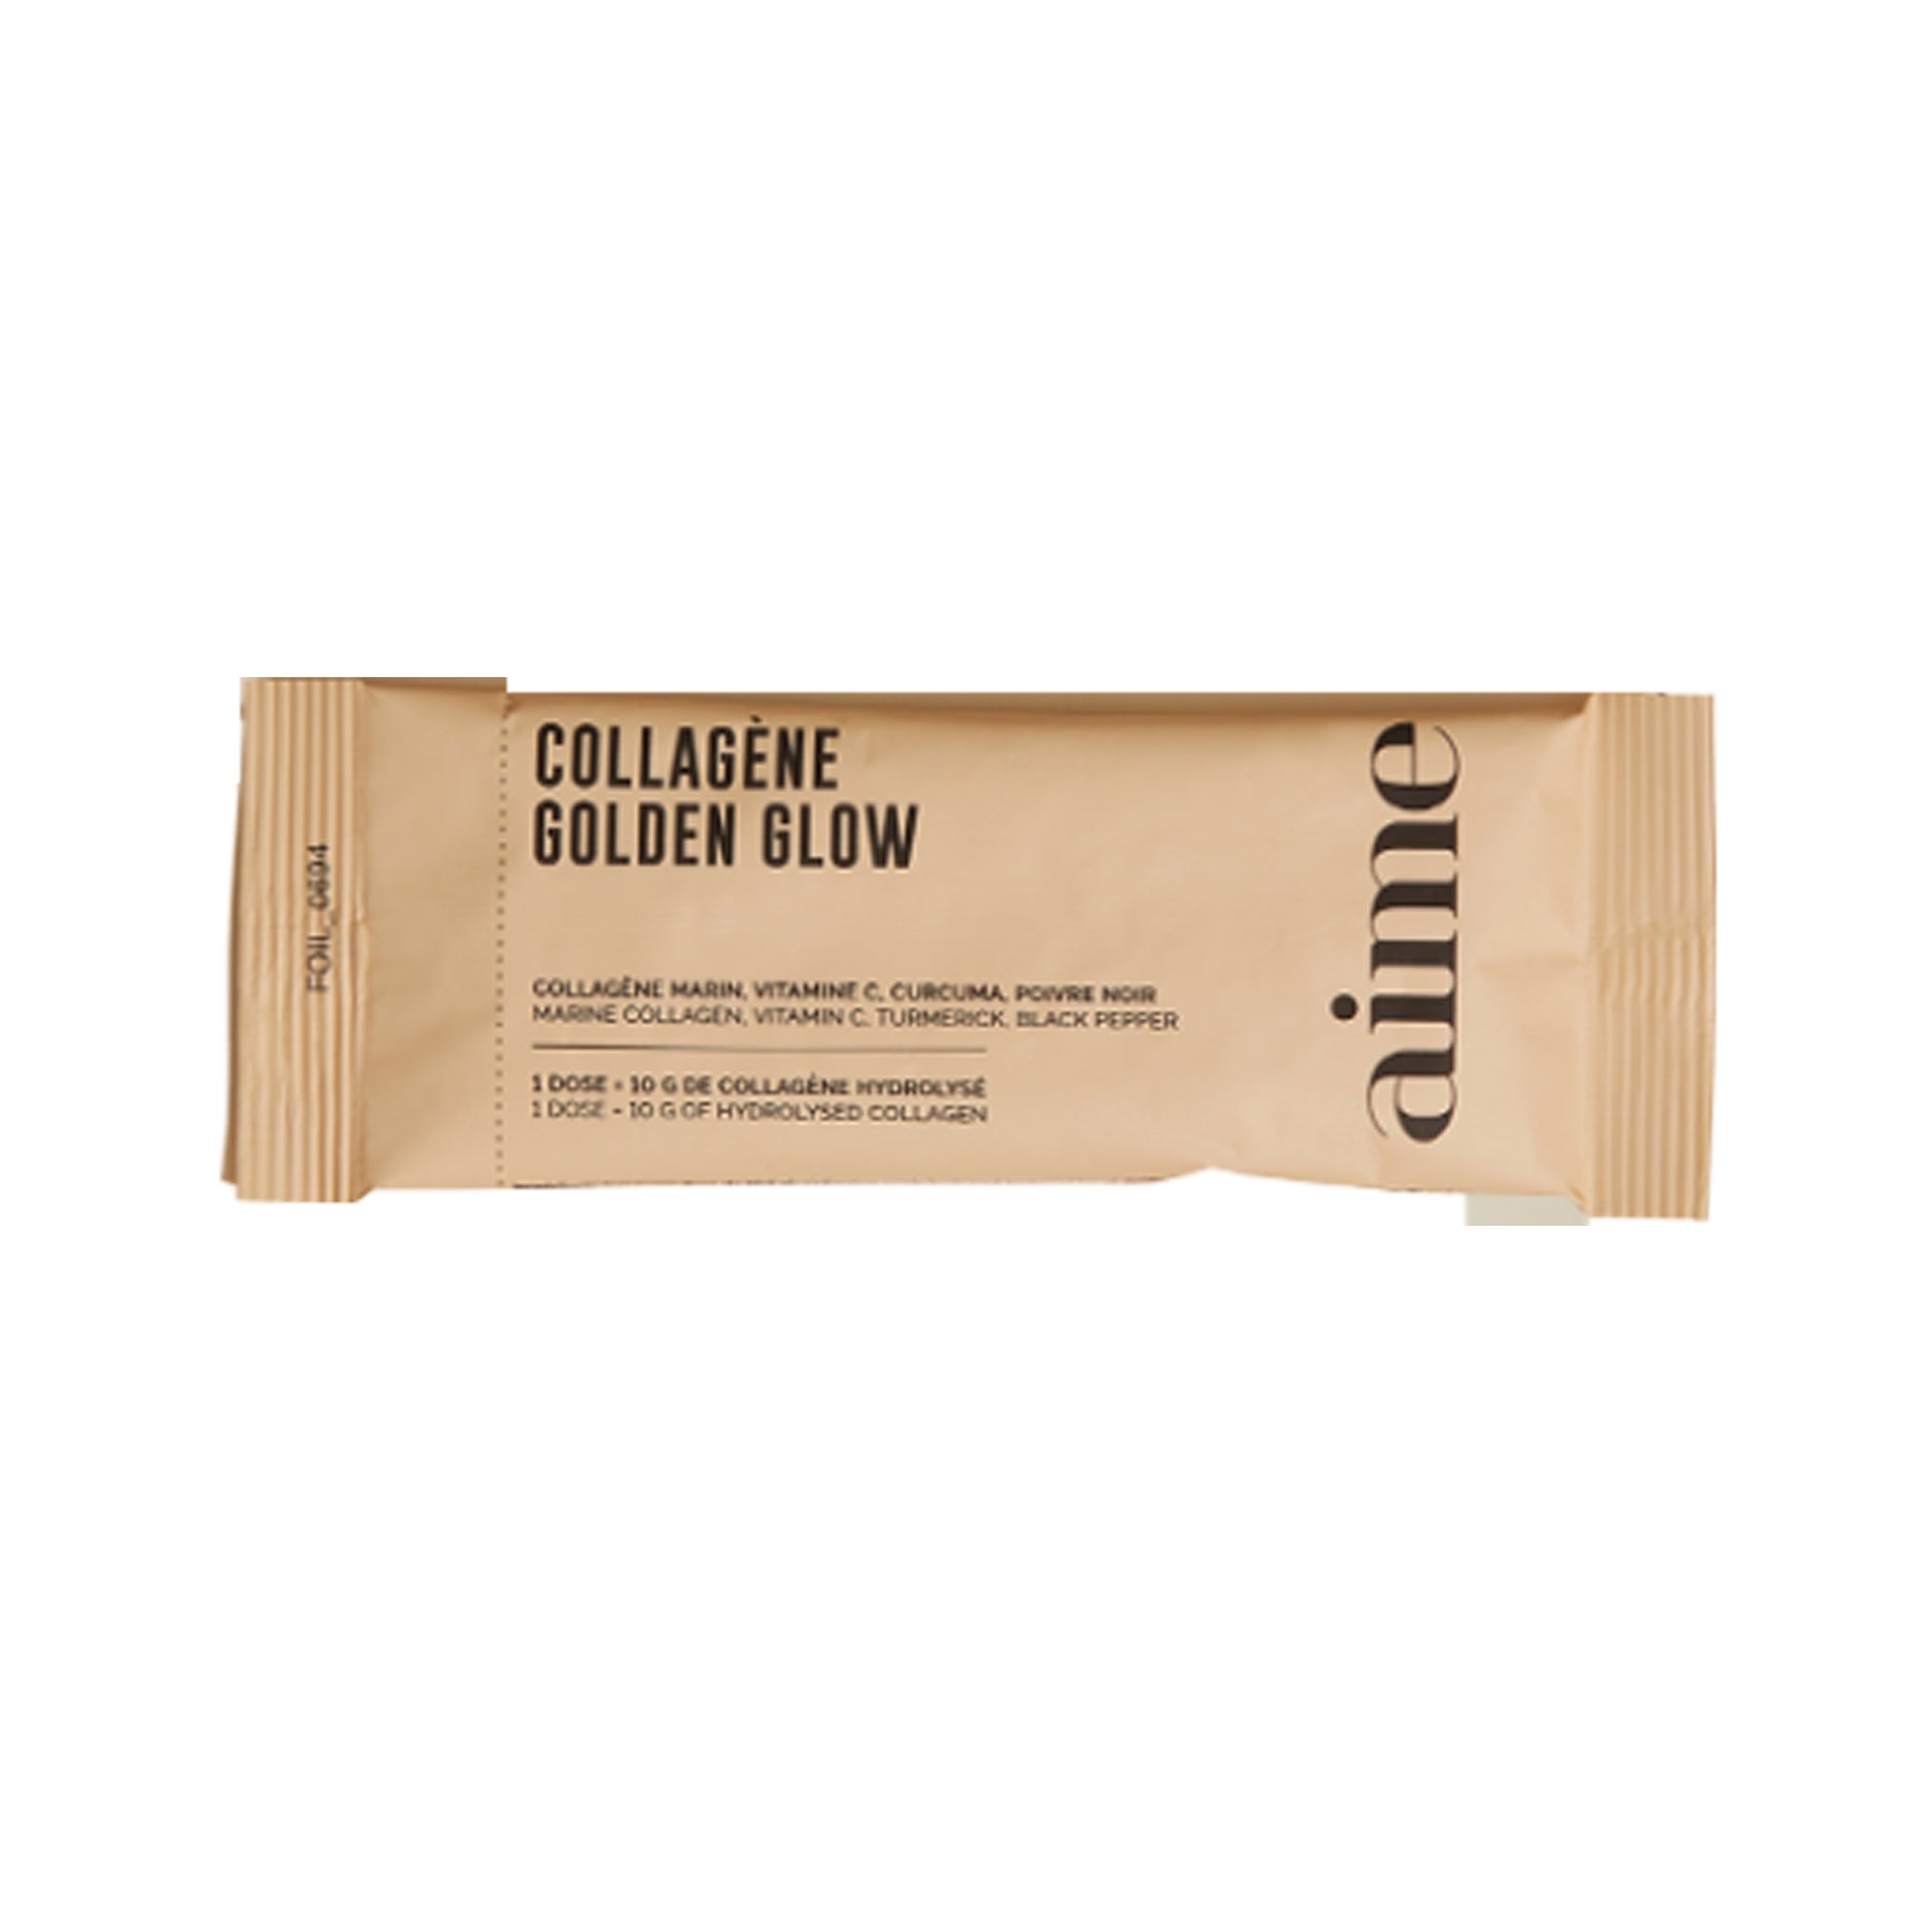 Offert : Stick de collagène "Collagène Glow" Free: “Collagen Glow” collagen stick - Aime